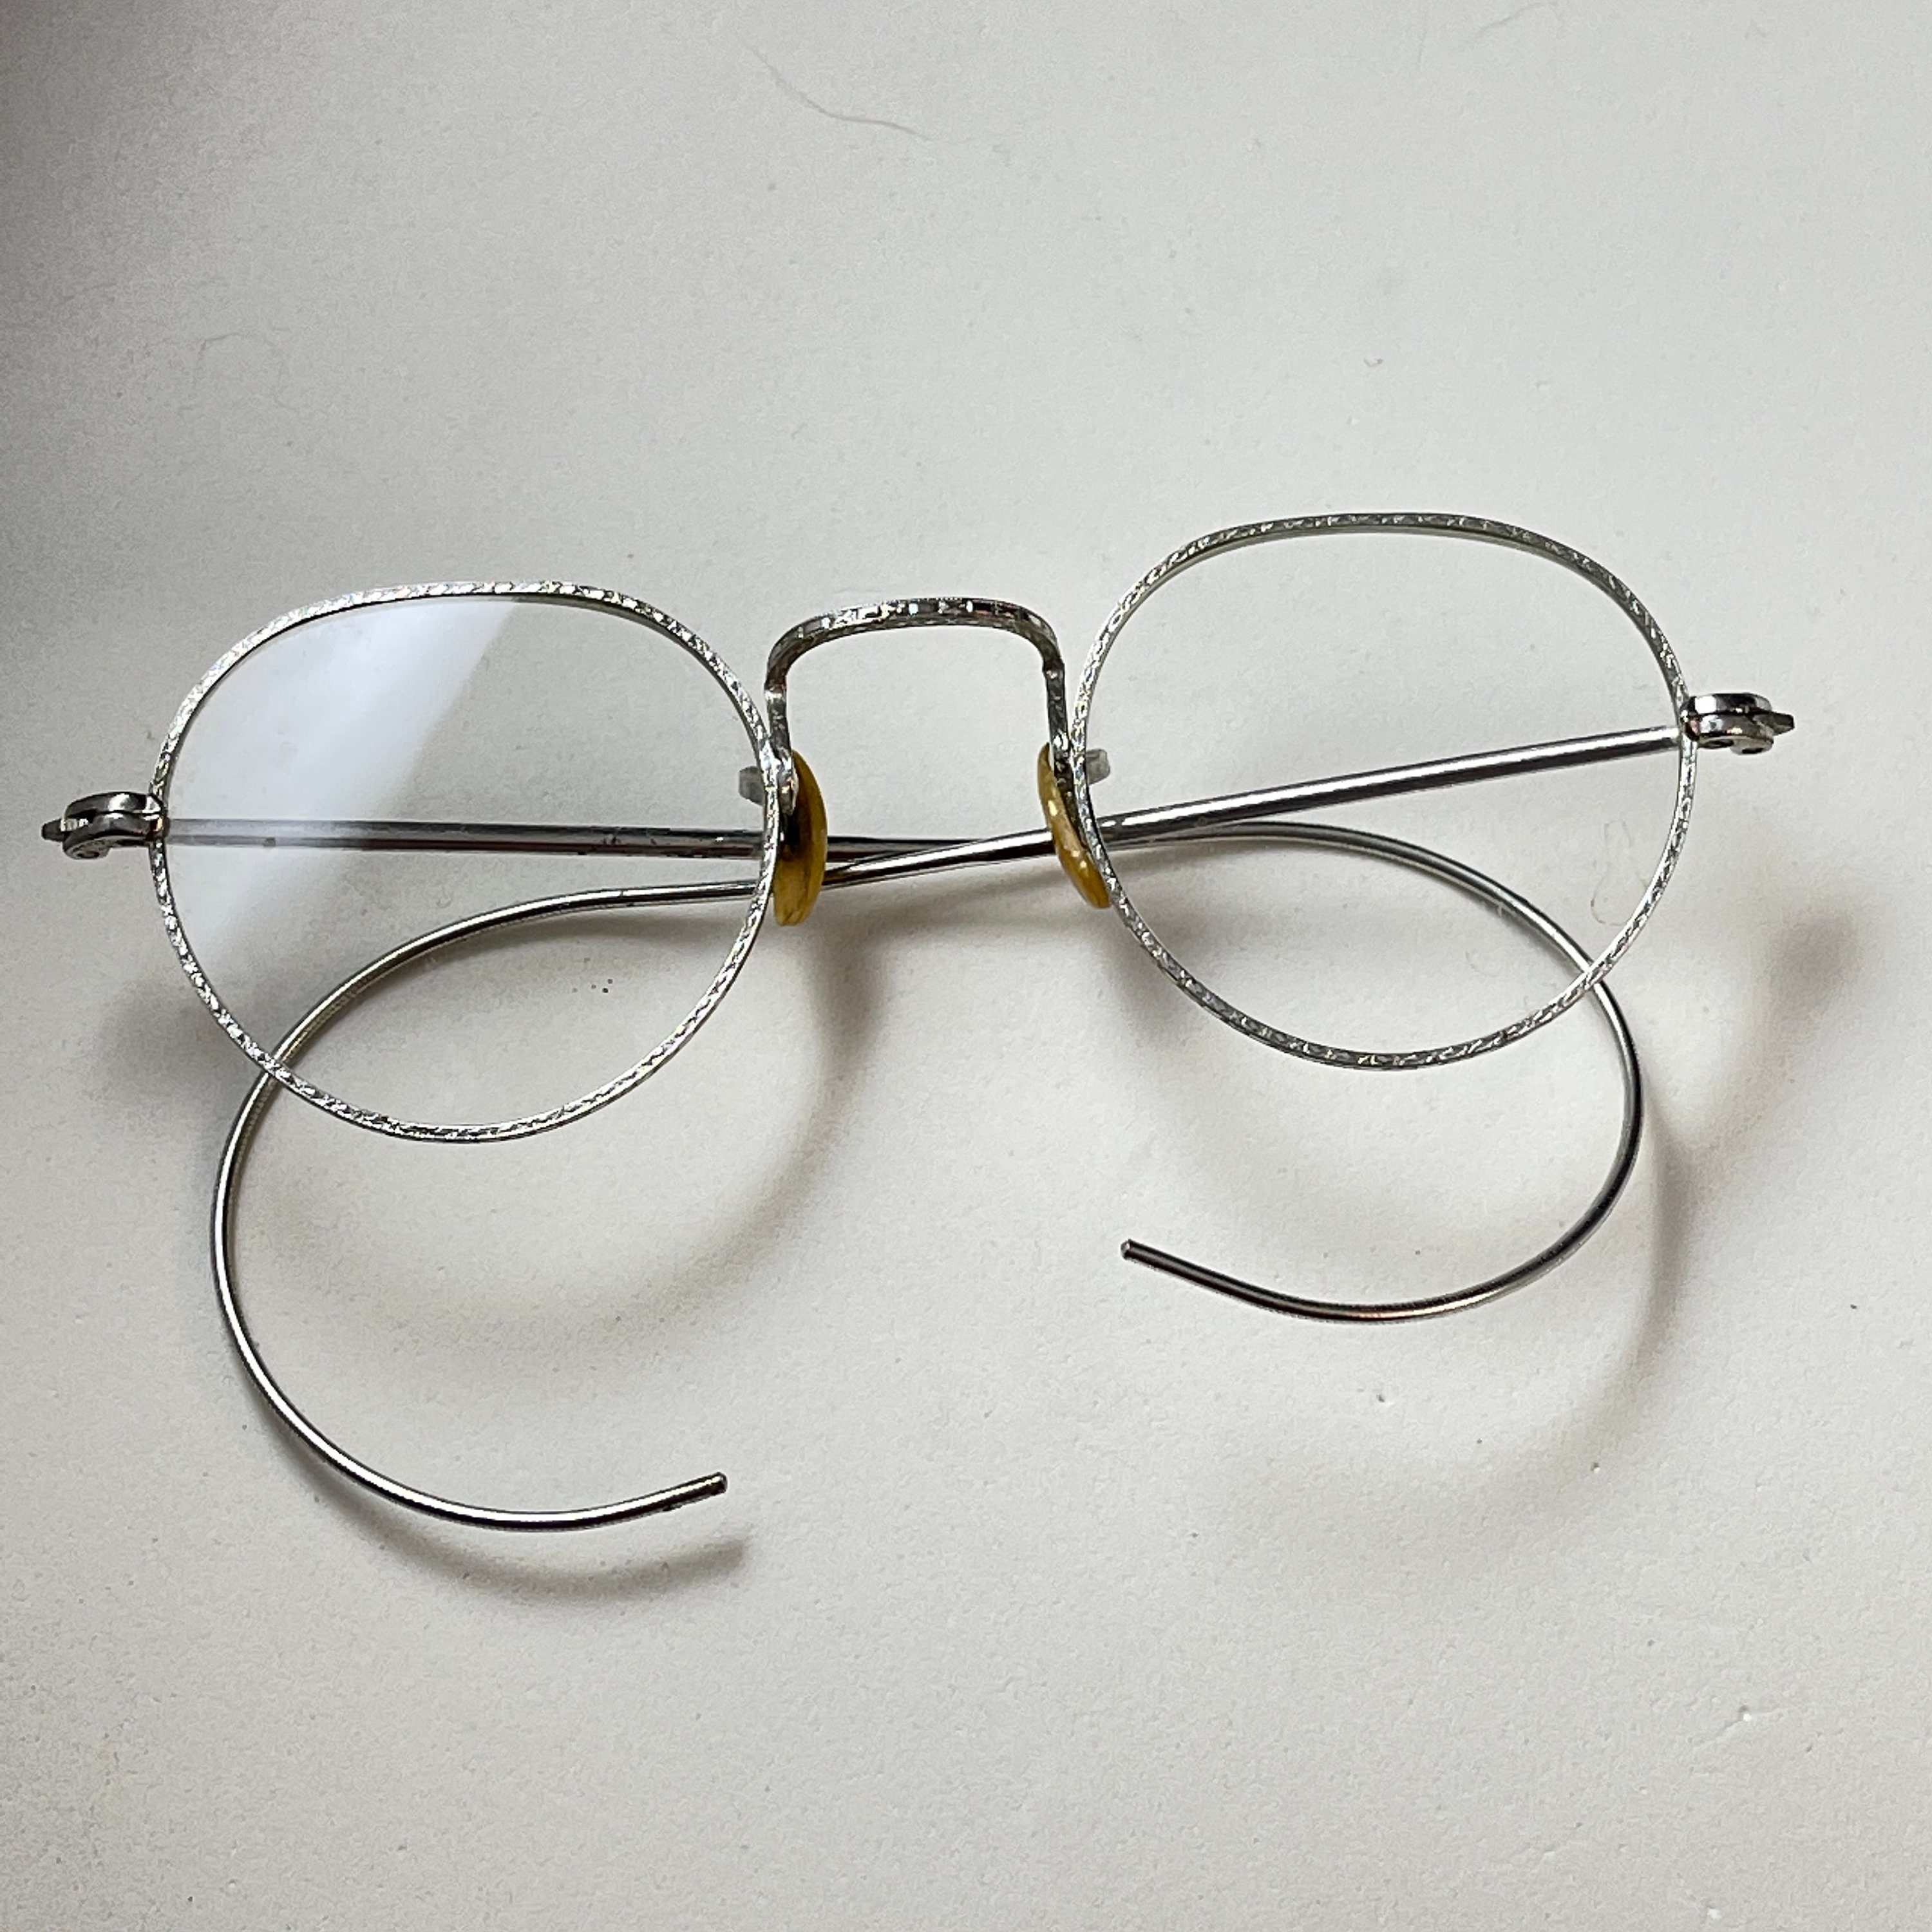 Silver Tone Vintage Eyeglasses Curled Temple Ends Antique   Etsy